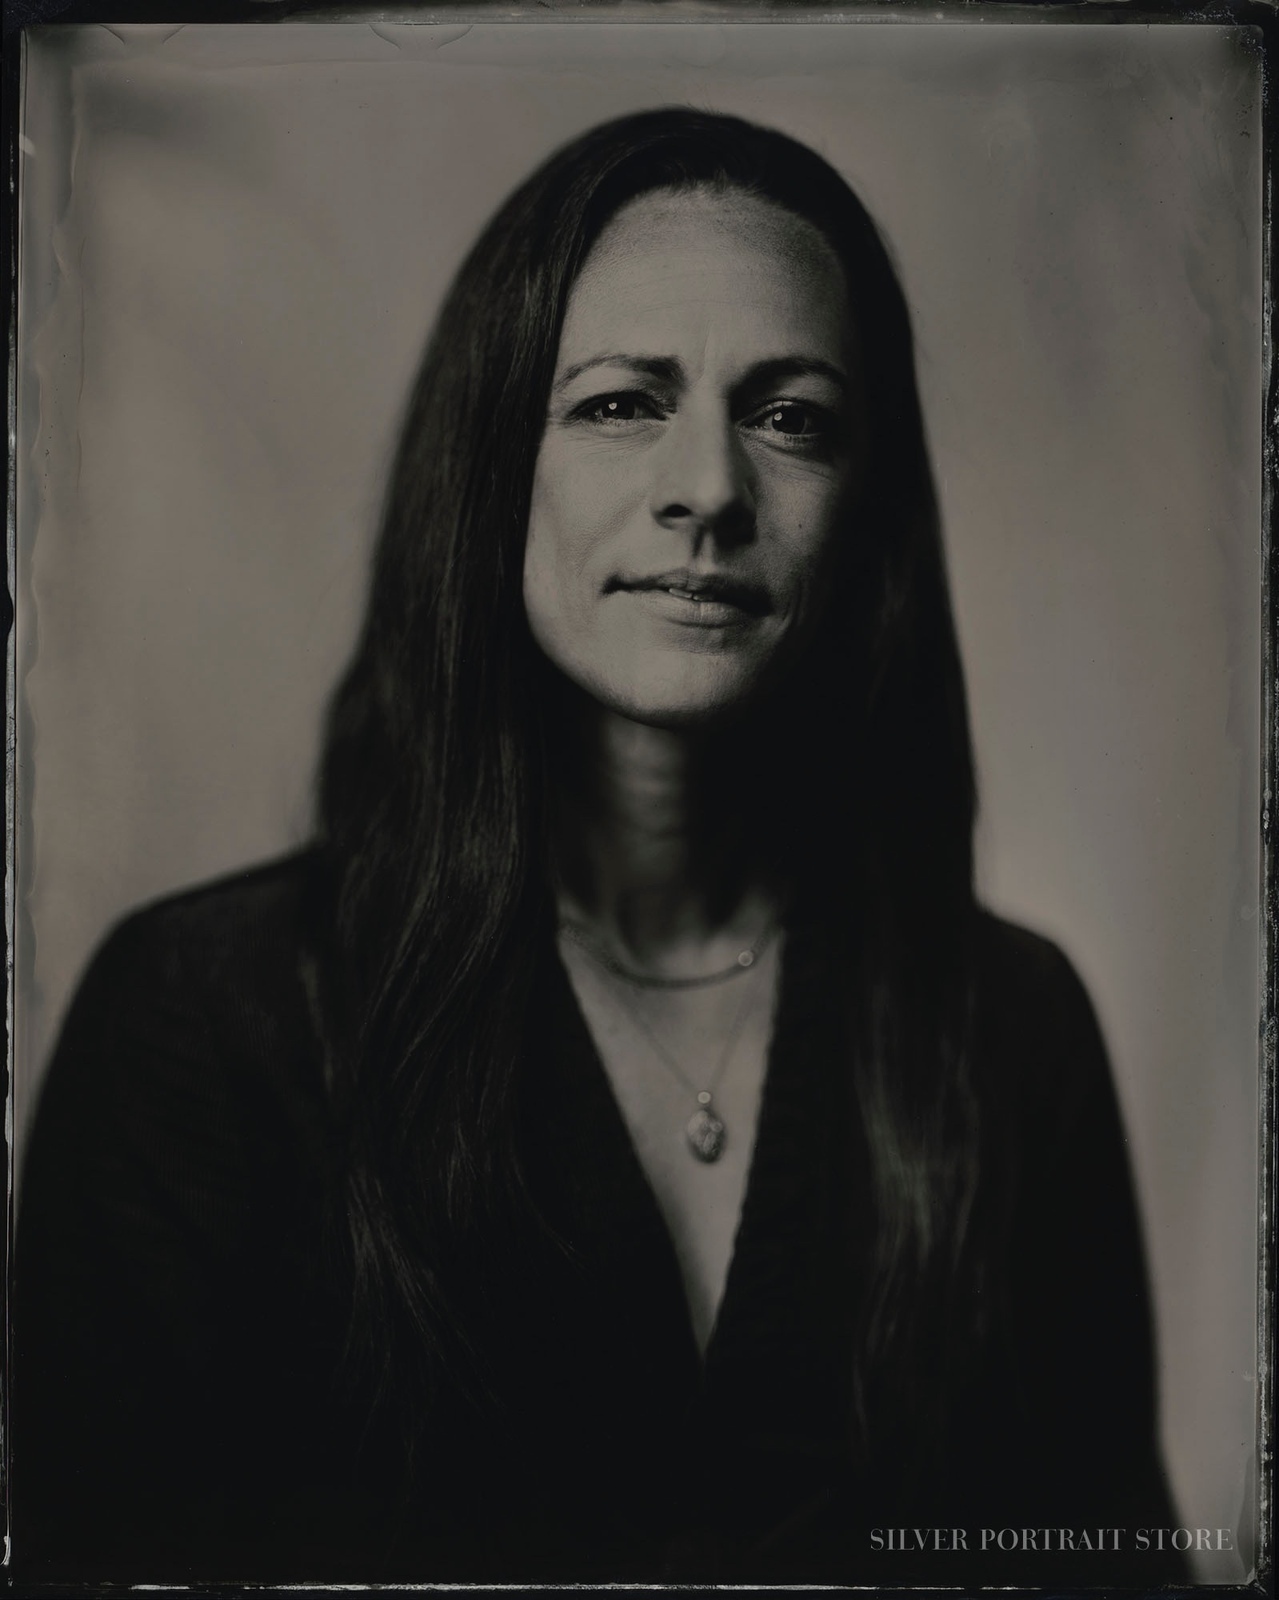 Jennifer-Silver Portrait Store-Wet plate collodion-Tintype 20 x 25 cm.